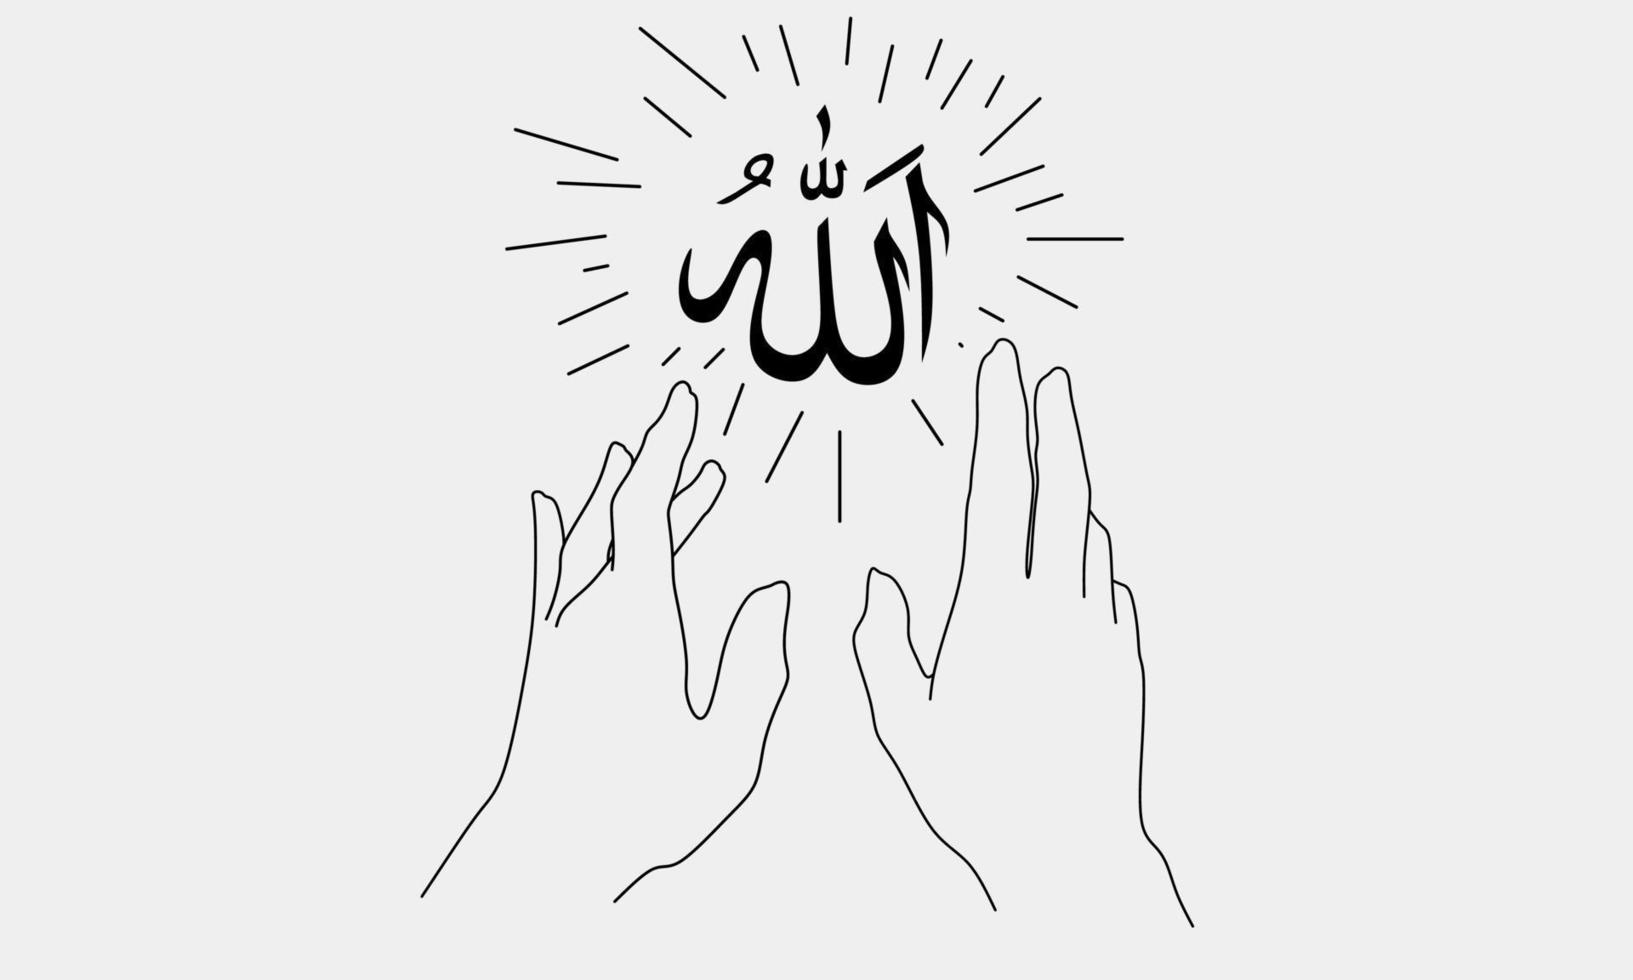 Allah calligraphy and hands gesture minimalist line art style. Islamic god vector illustrative design